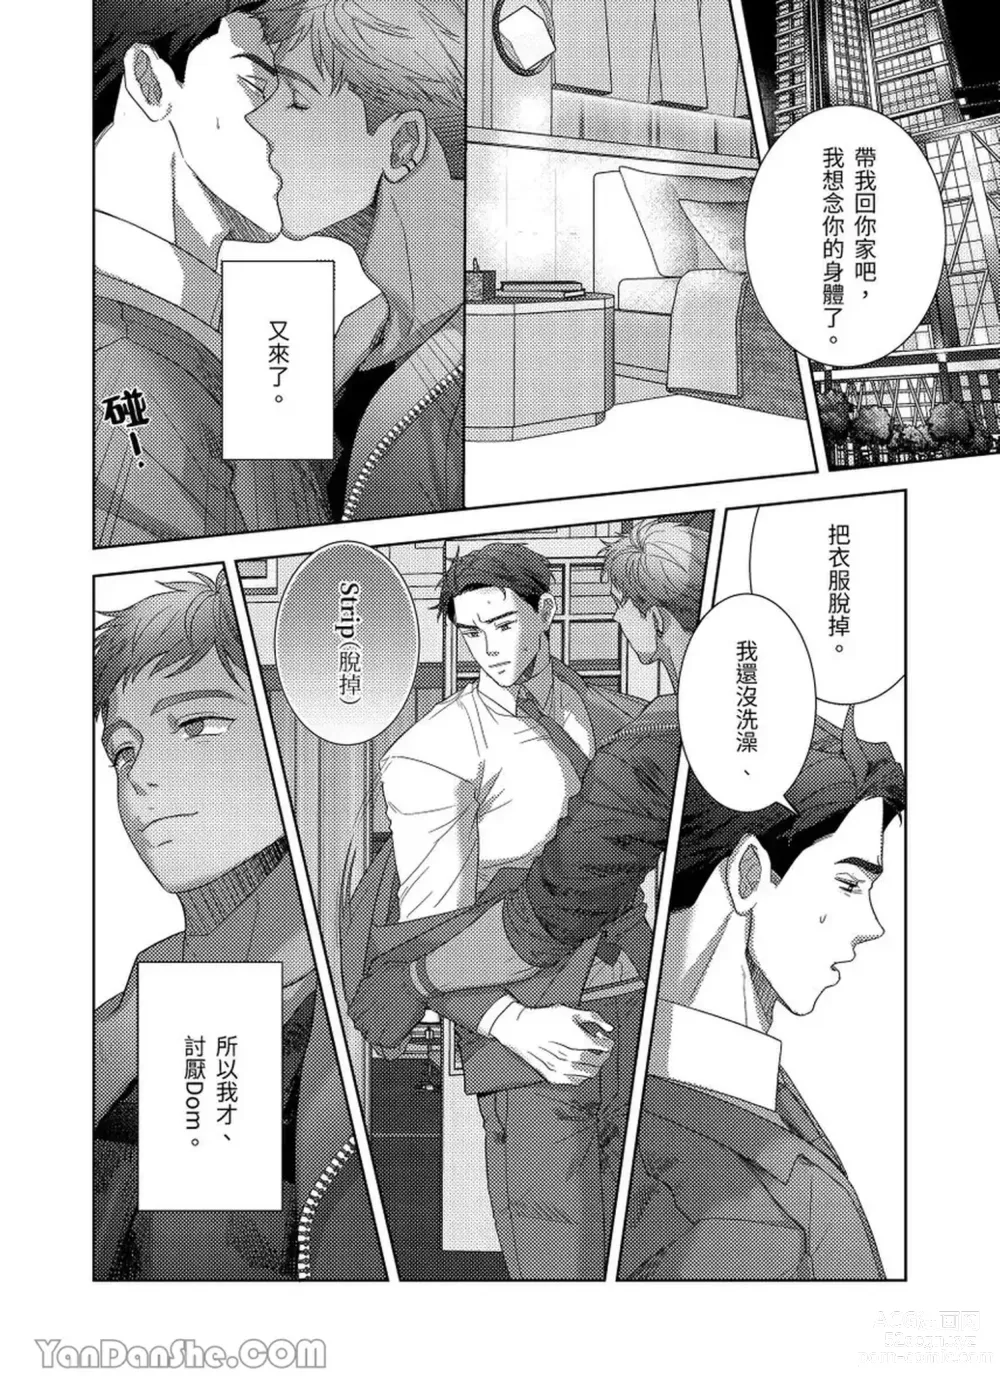 Page 44 of manga Dom&Sub